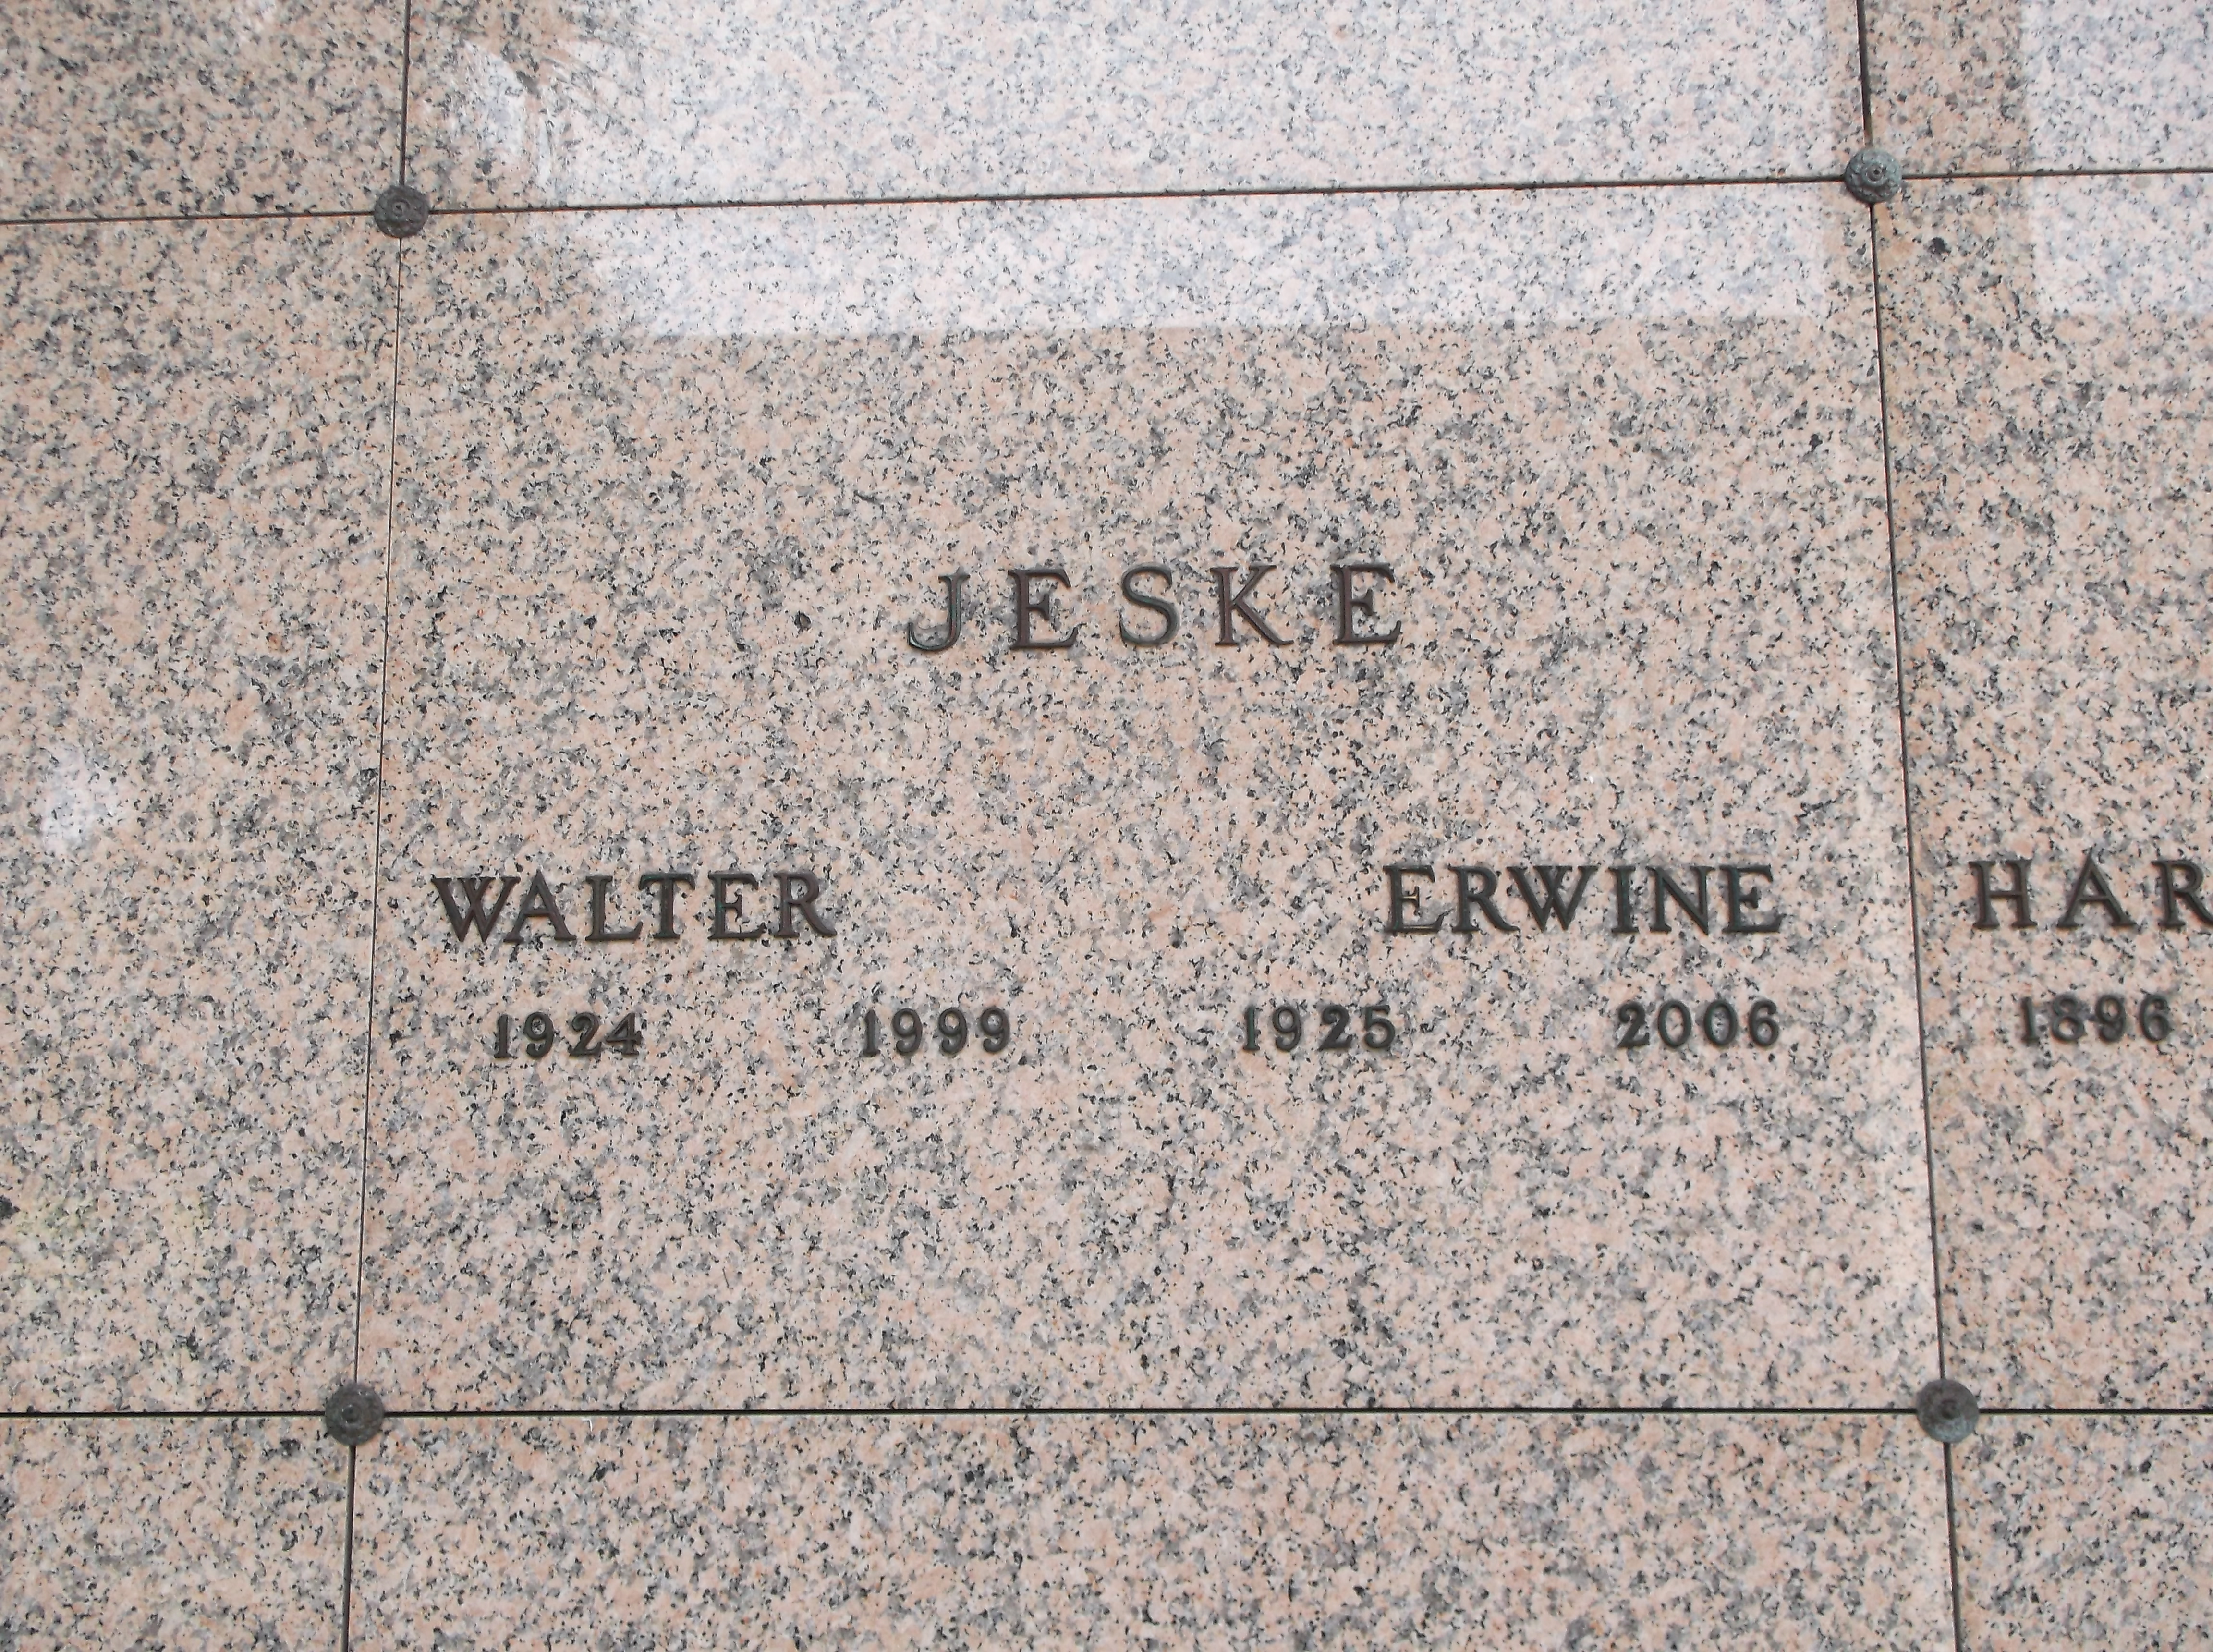 Walter Jeske